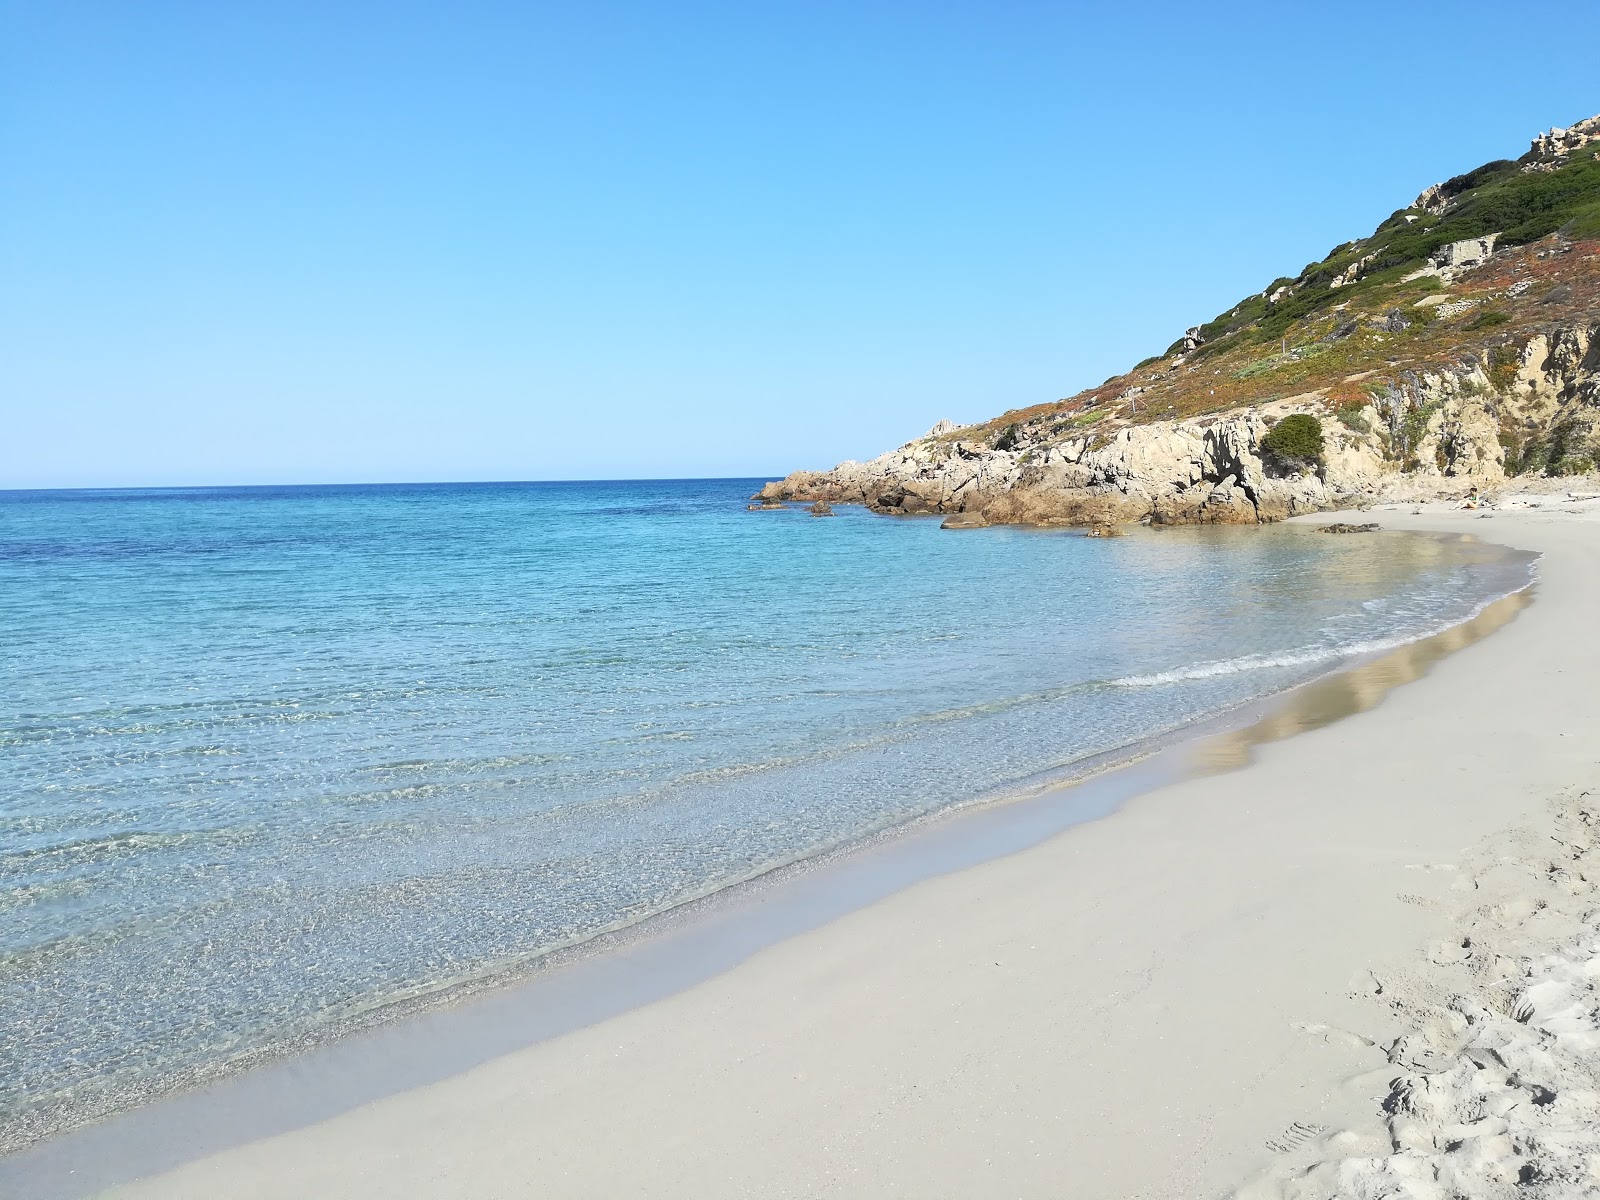 Foto de Spiaggia La Liccia com enseadas médias